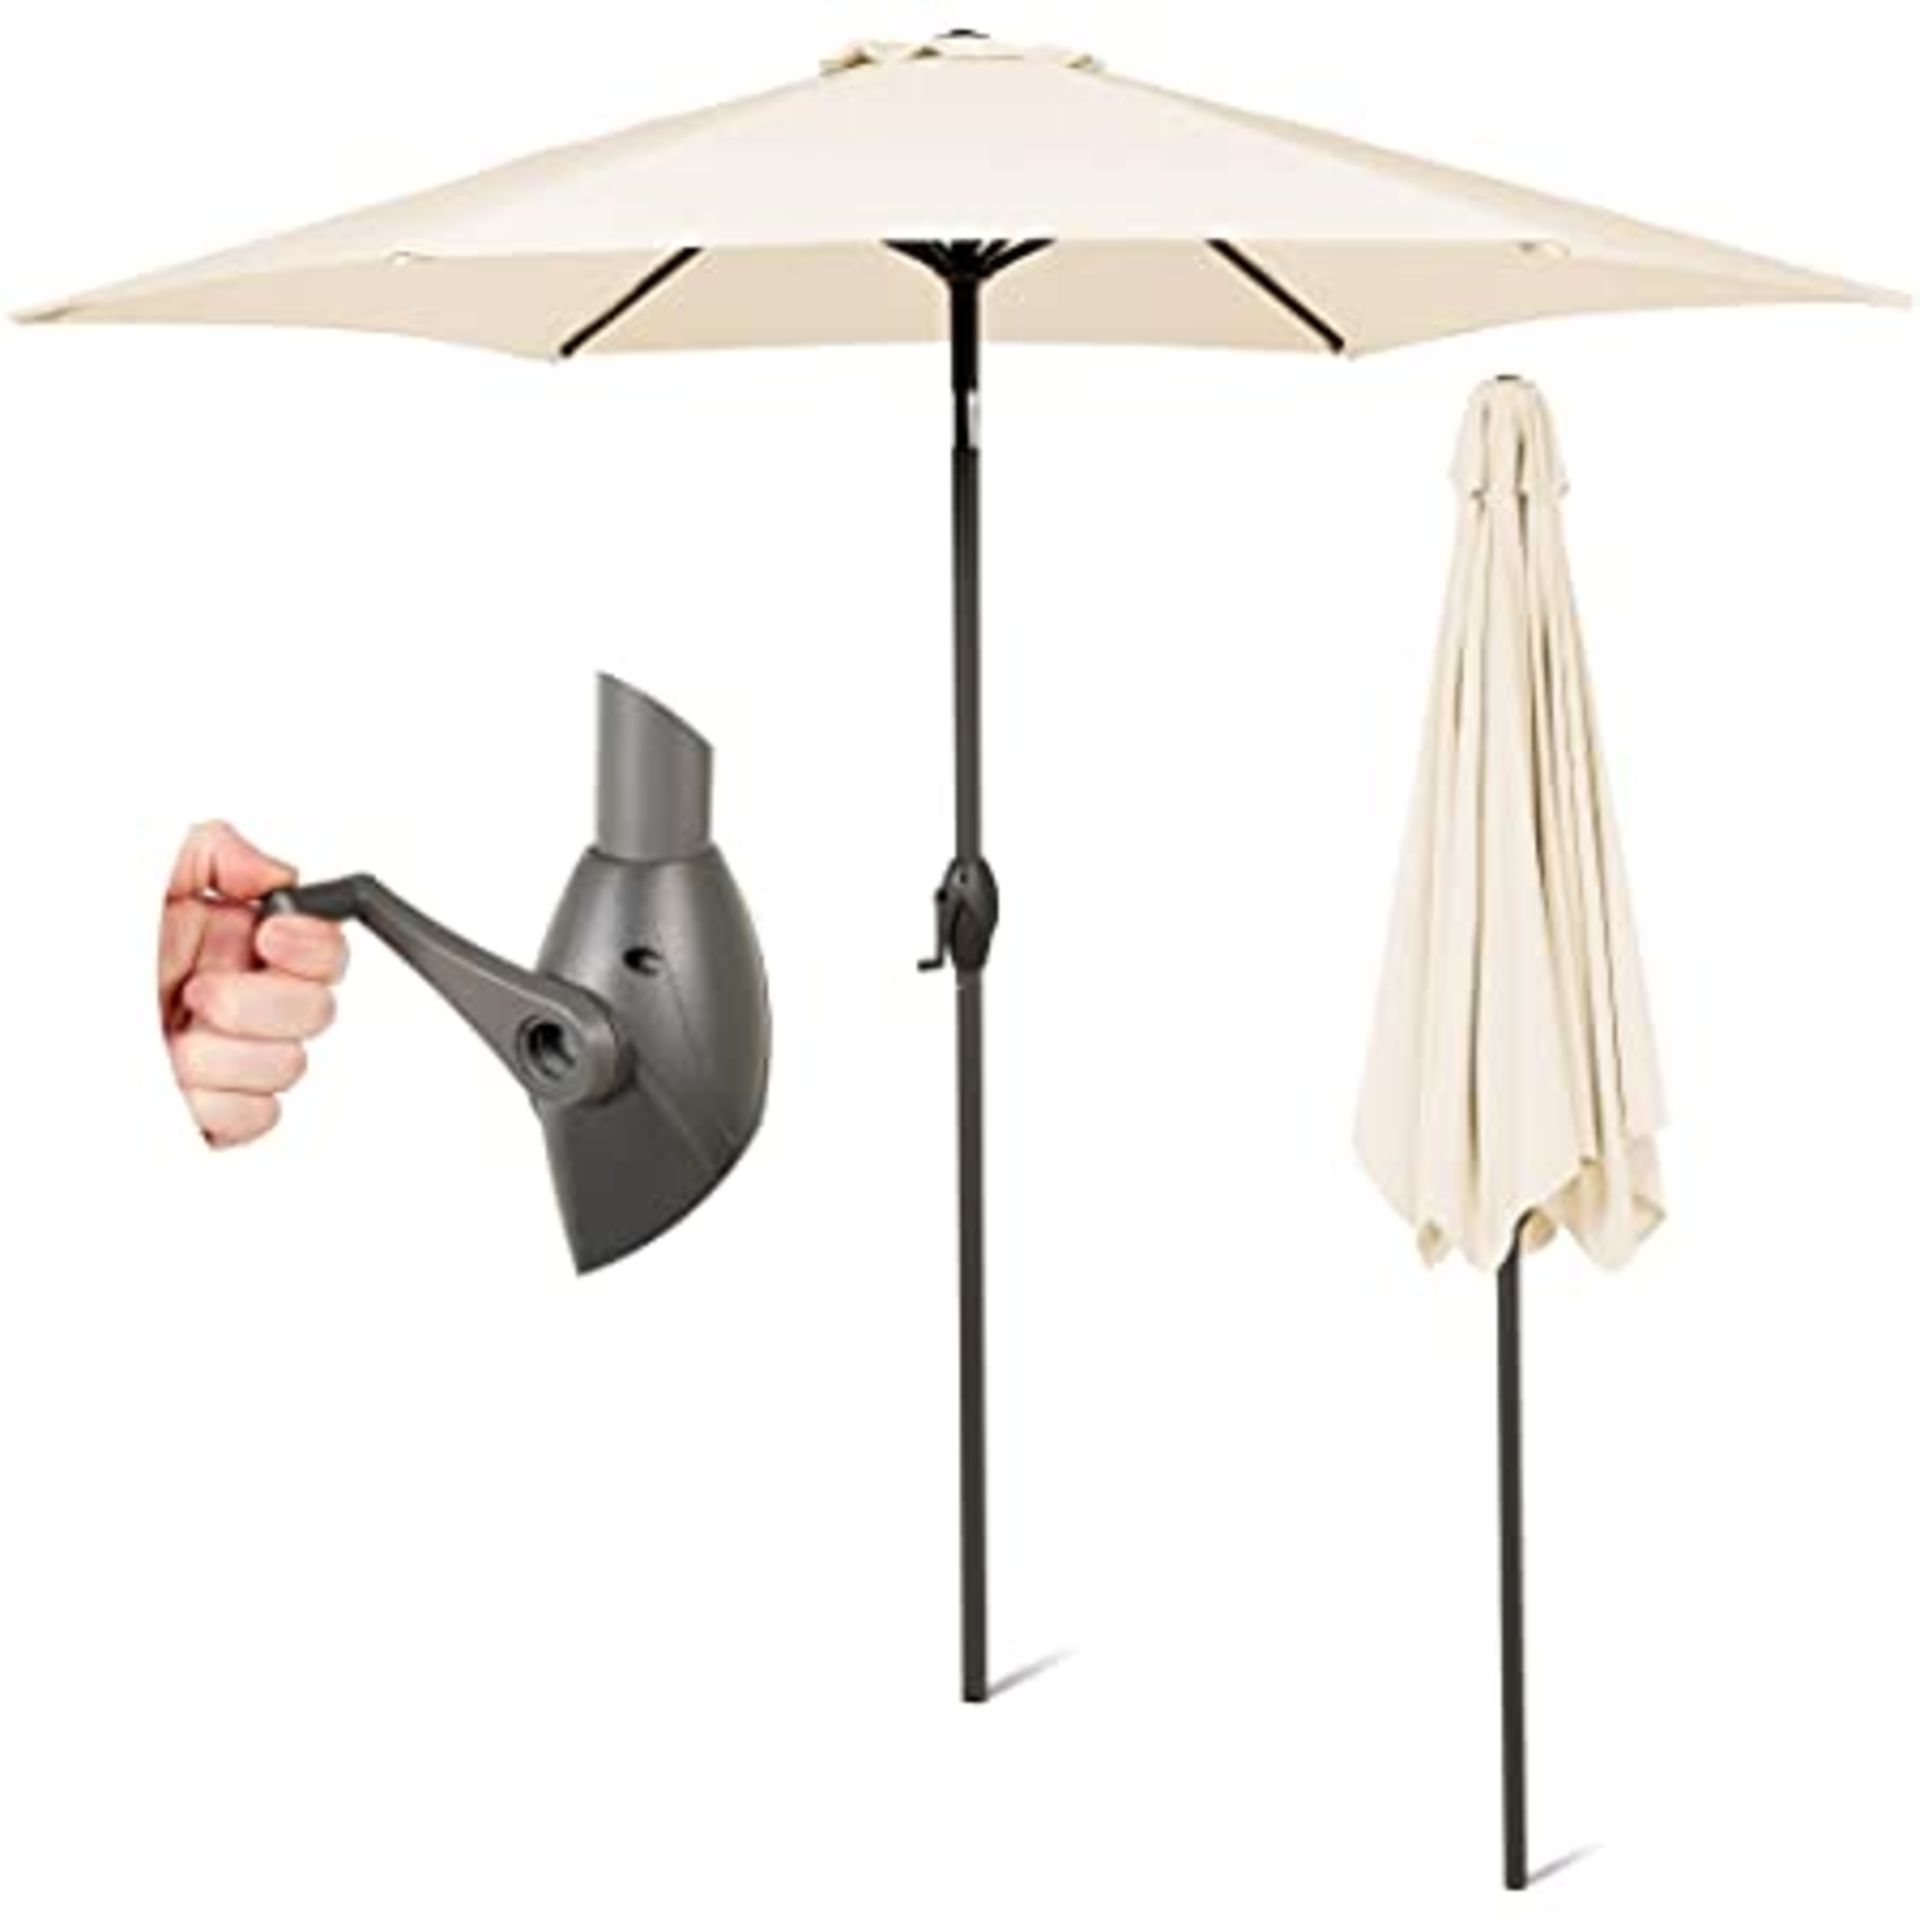 * 1 x Ivory Middle Pole Umbrella with Parasol Base. Parasol 2.7m Diameter. Steel Frame. 180g